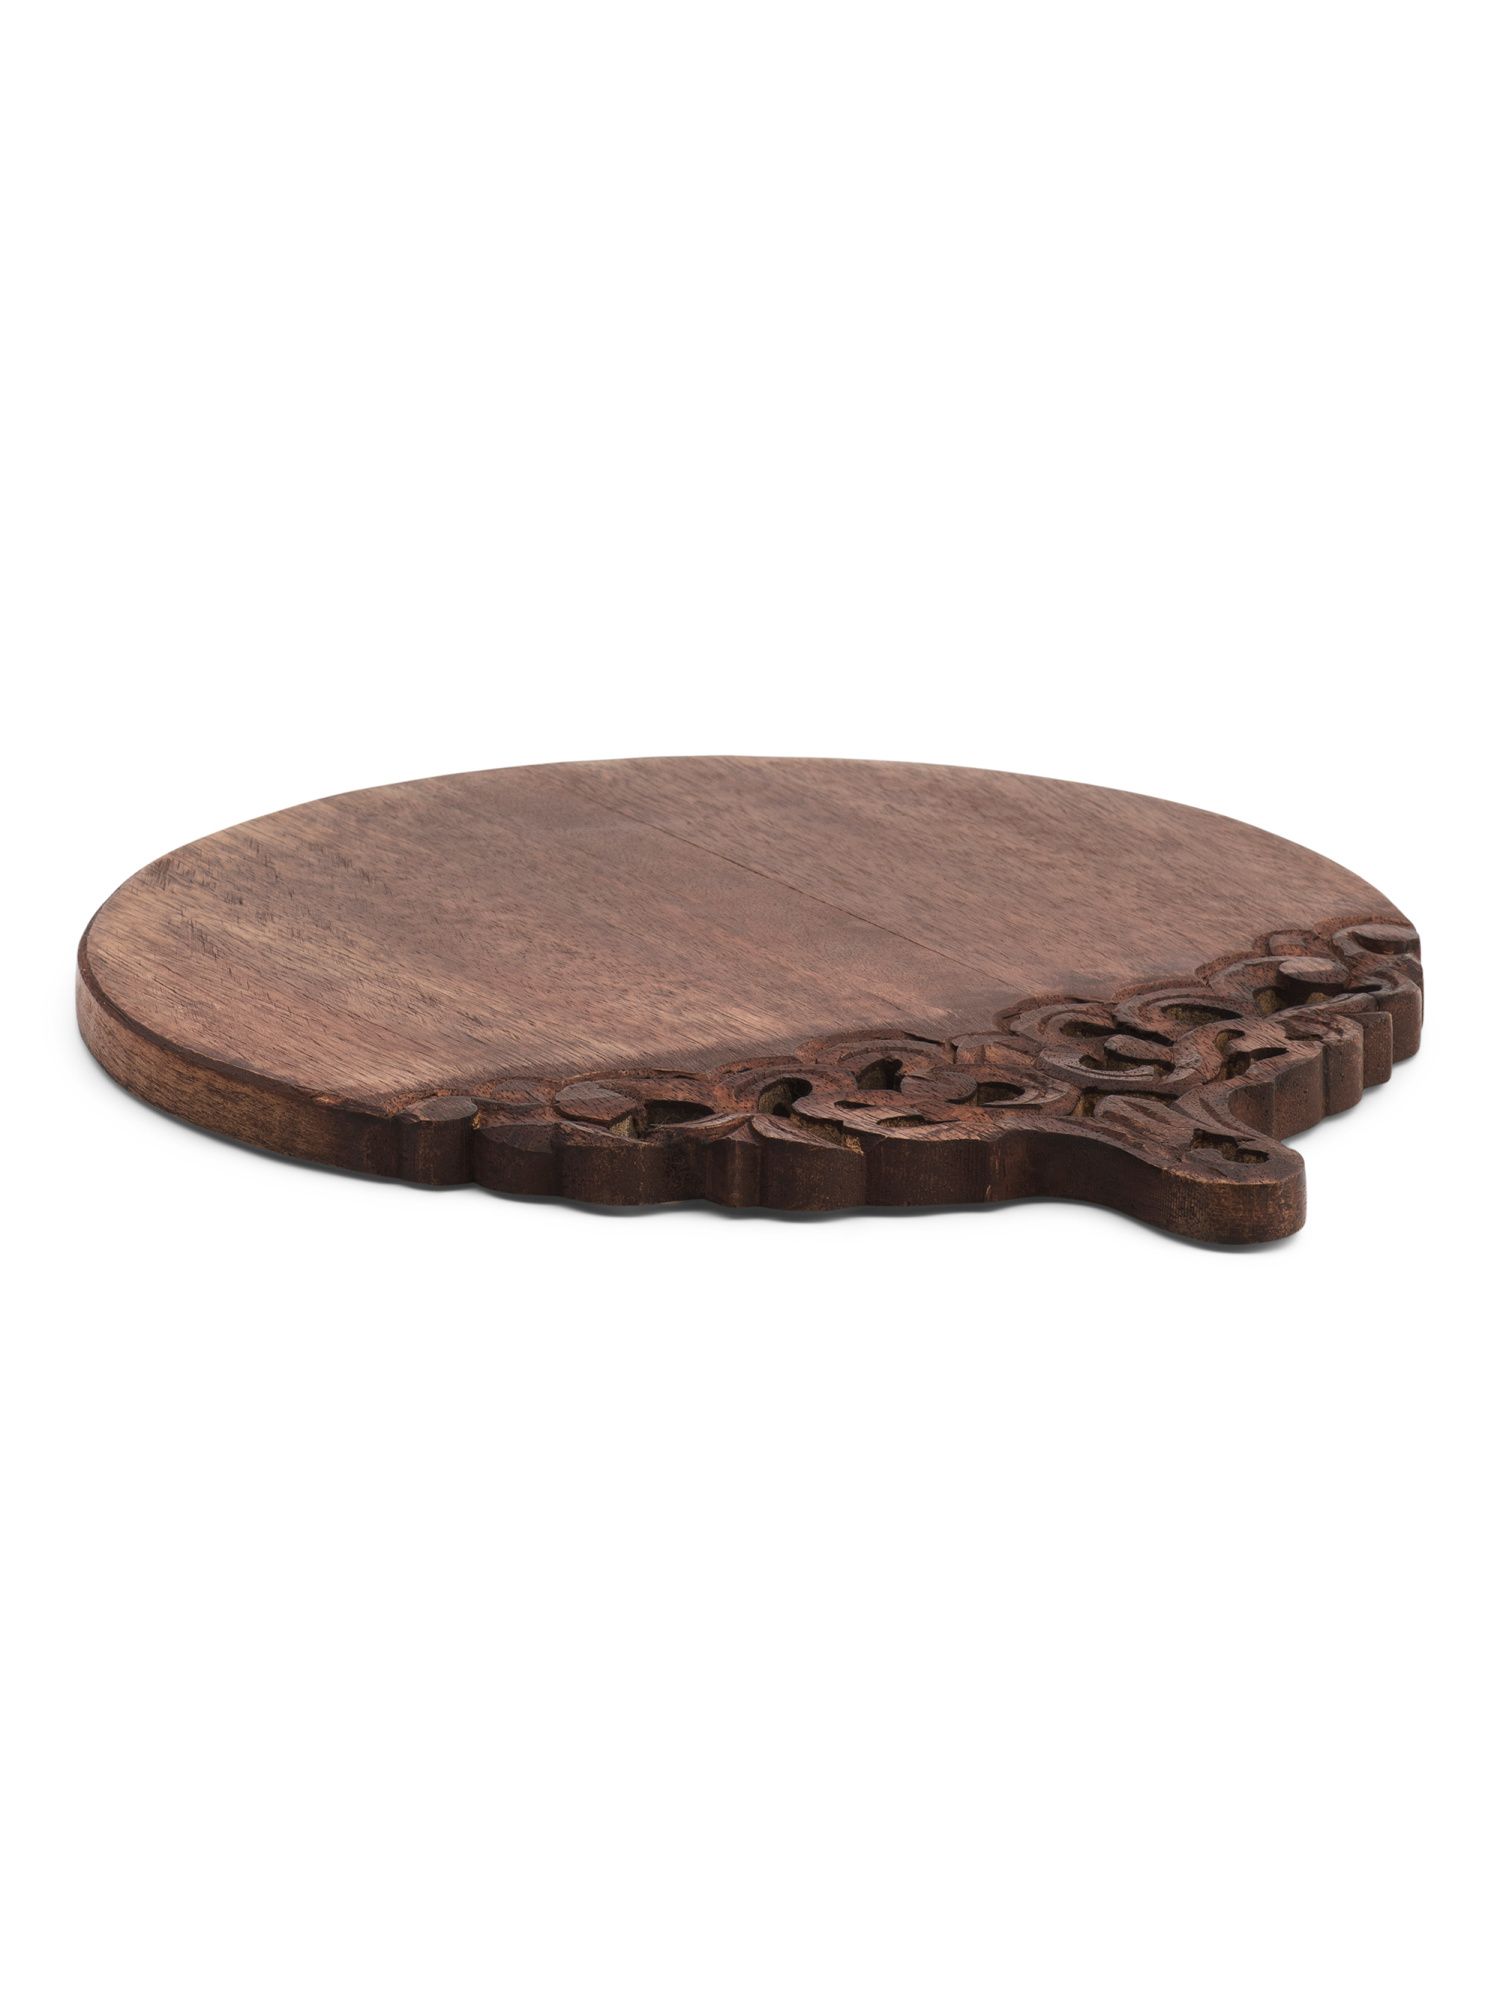 11.5in Wood Round Carved Cutting Board | TJ Maxx